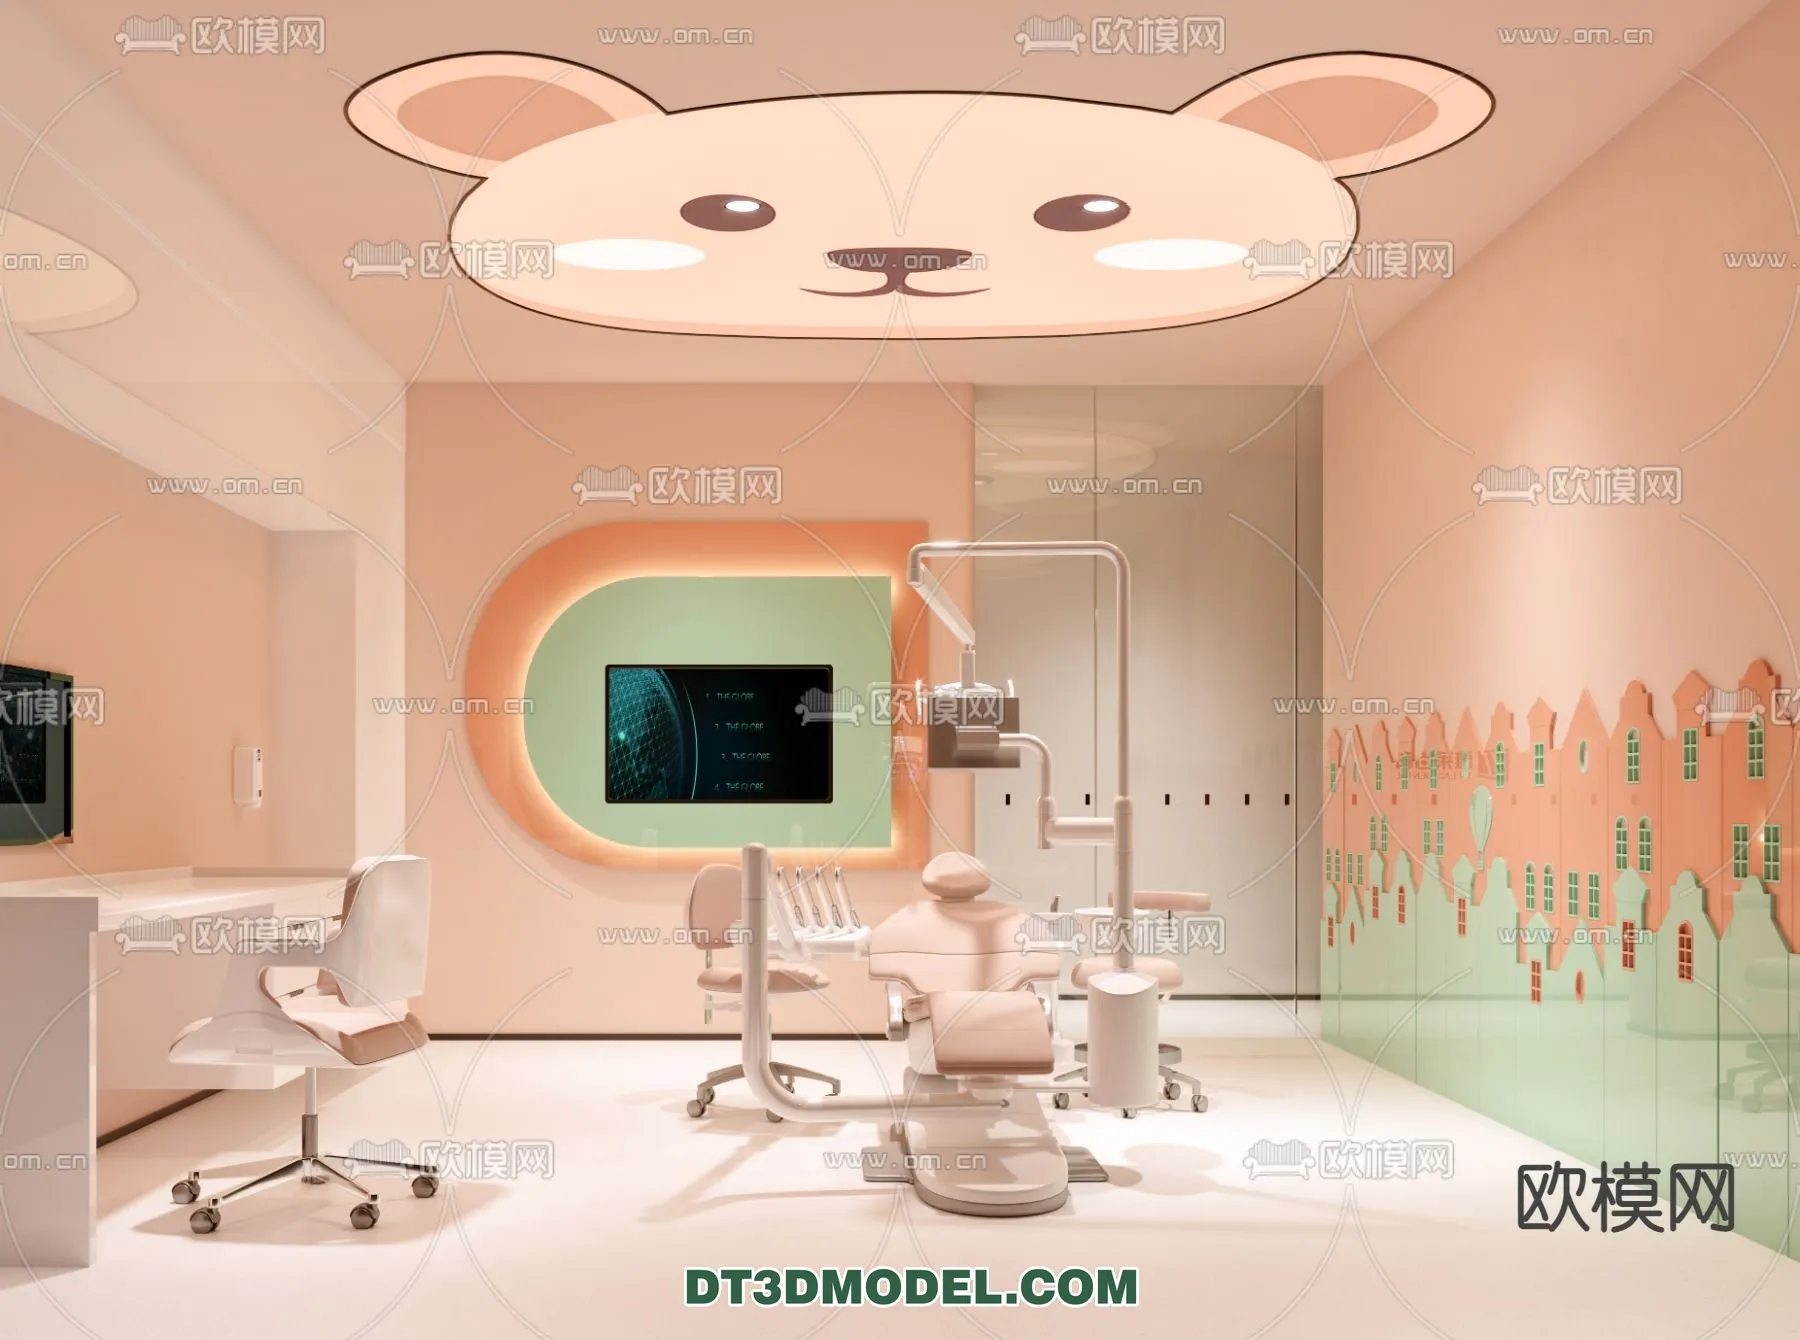 HOSPITAL 3D SCENES – MODERN – 0078